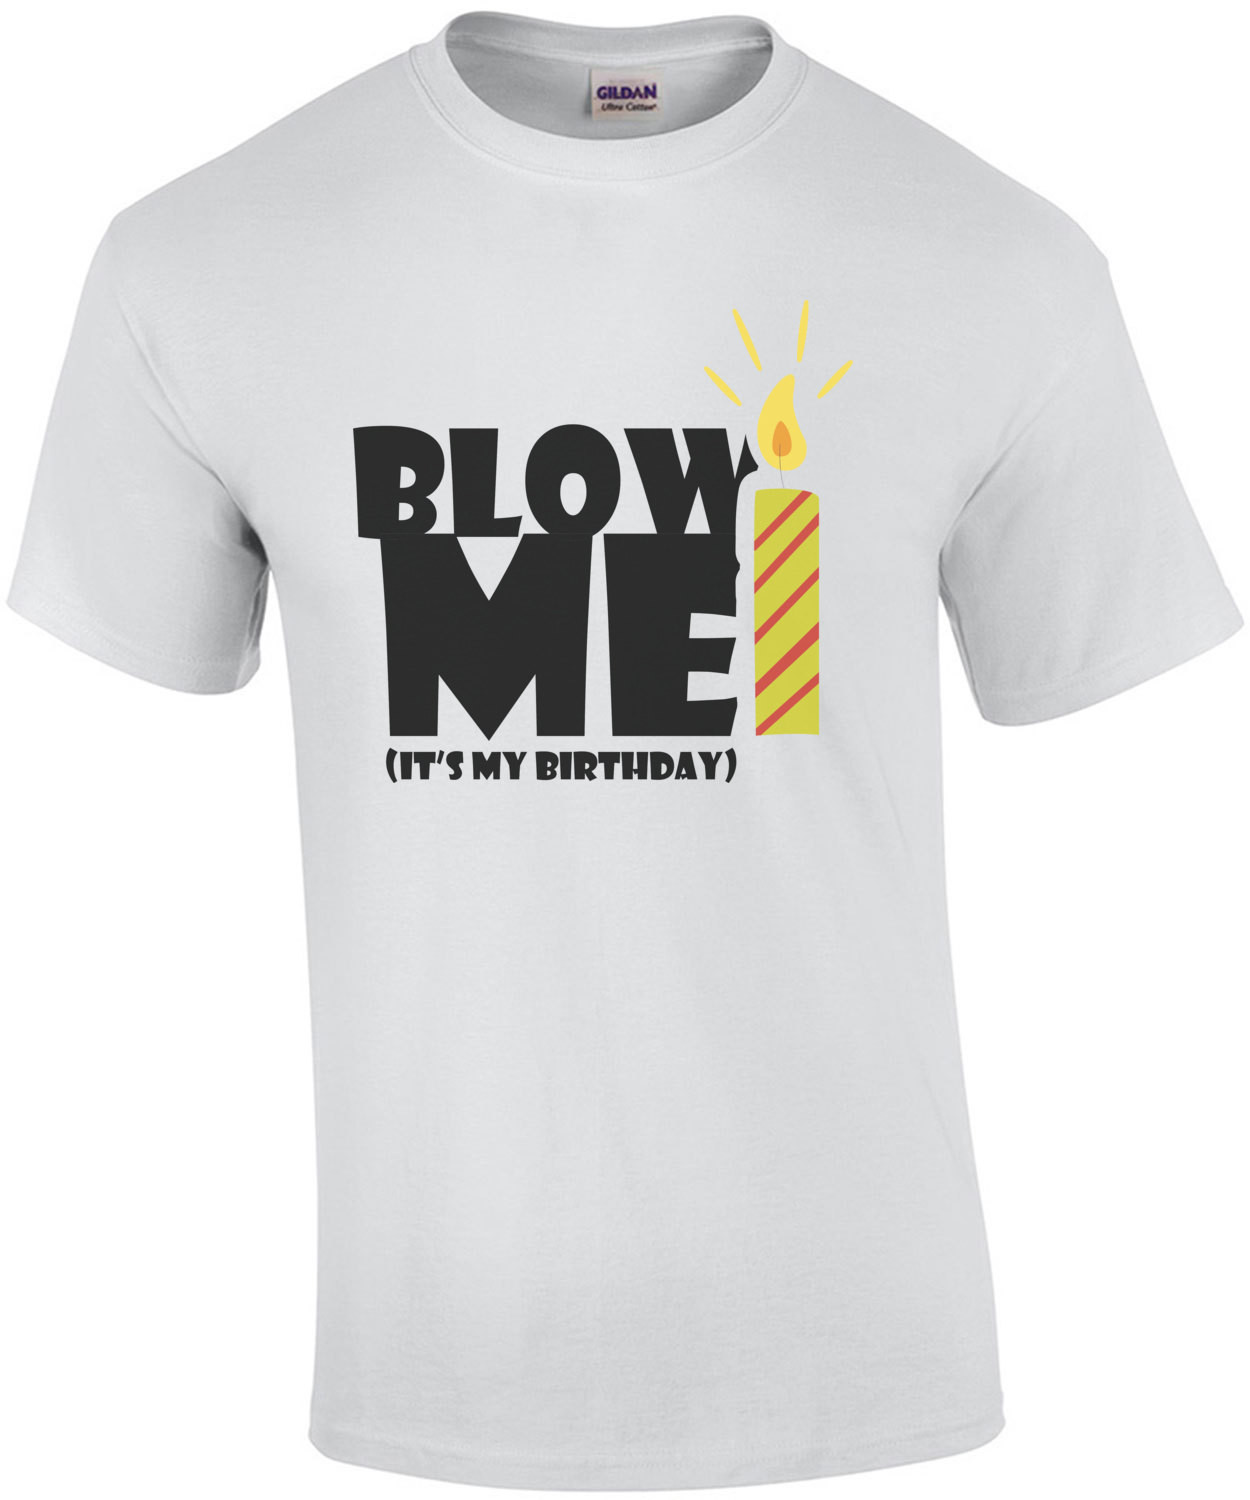 Blow me - It's my birthday - happy birthday t-shirt